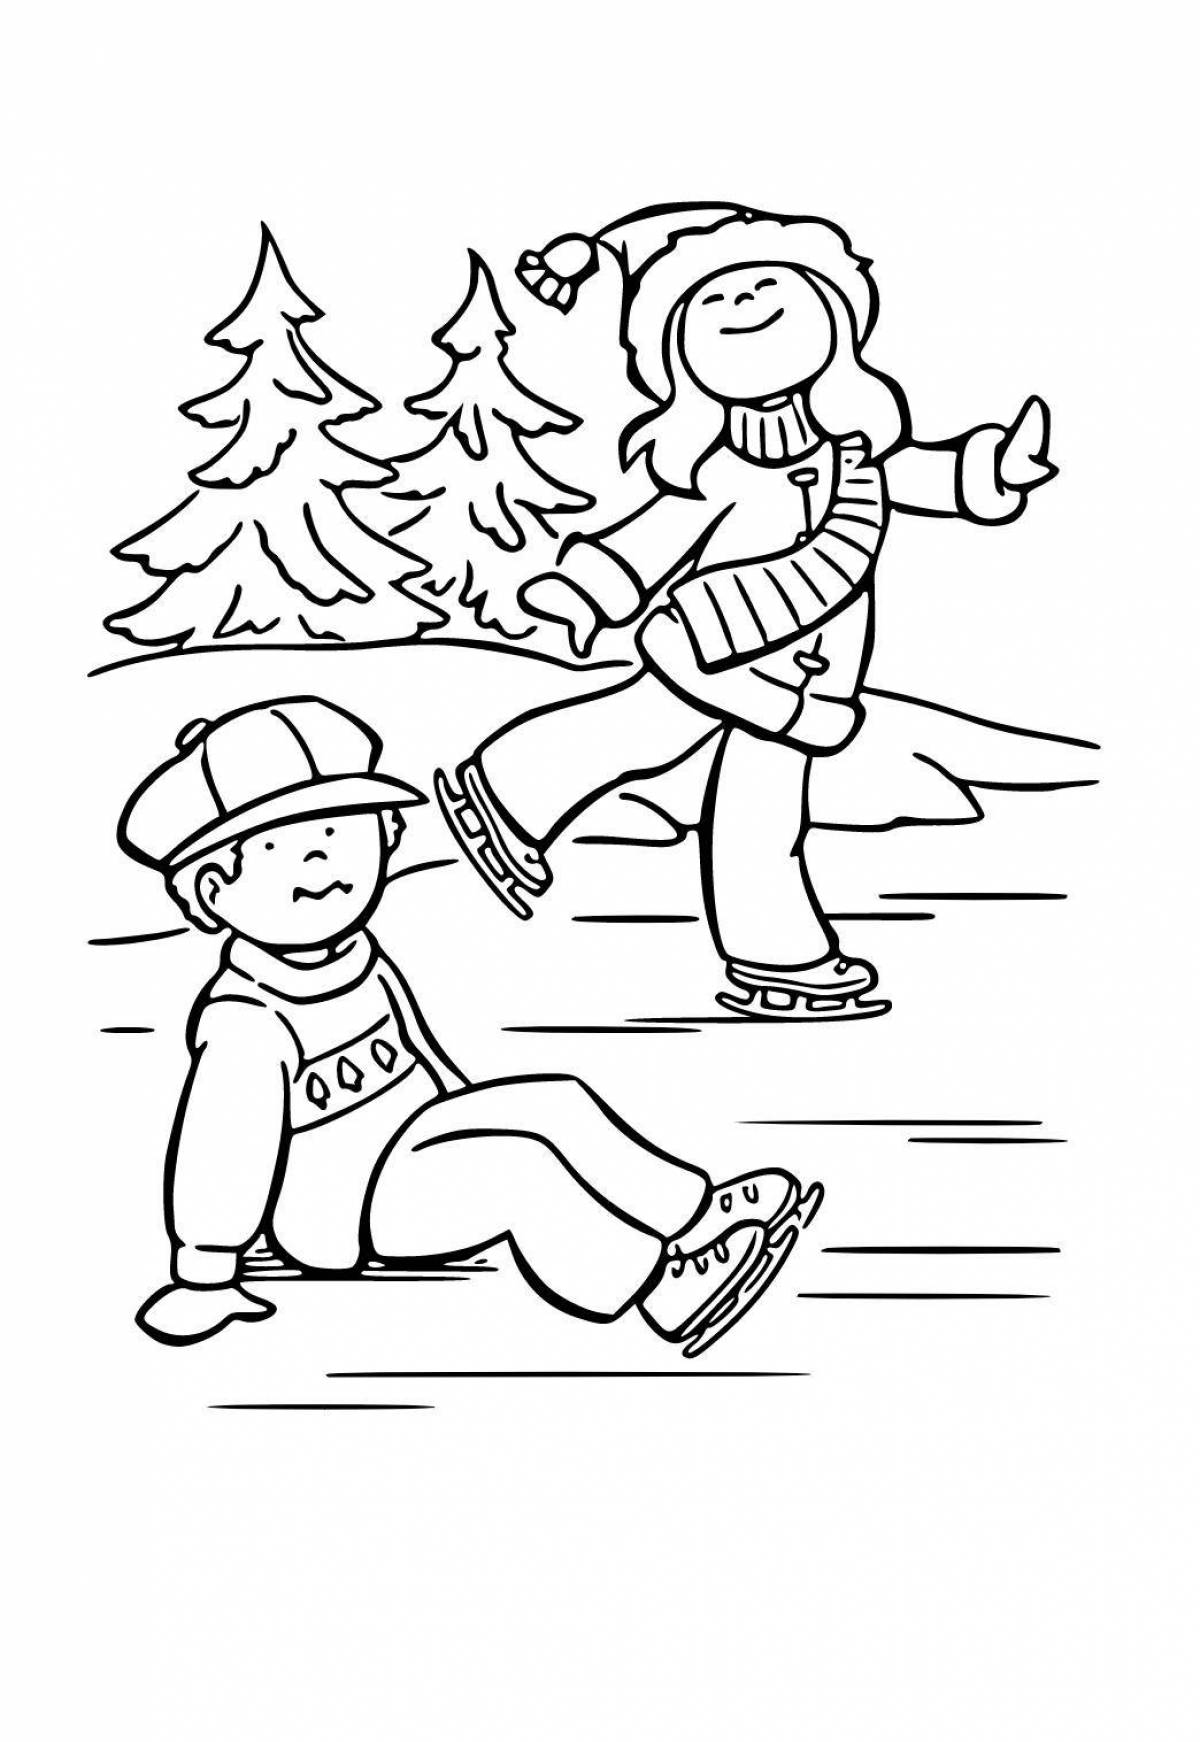 Preschool winter safety #4